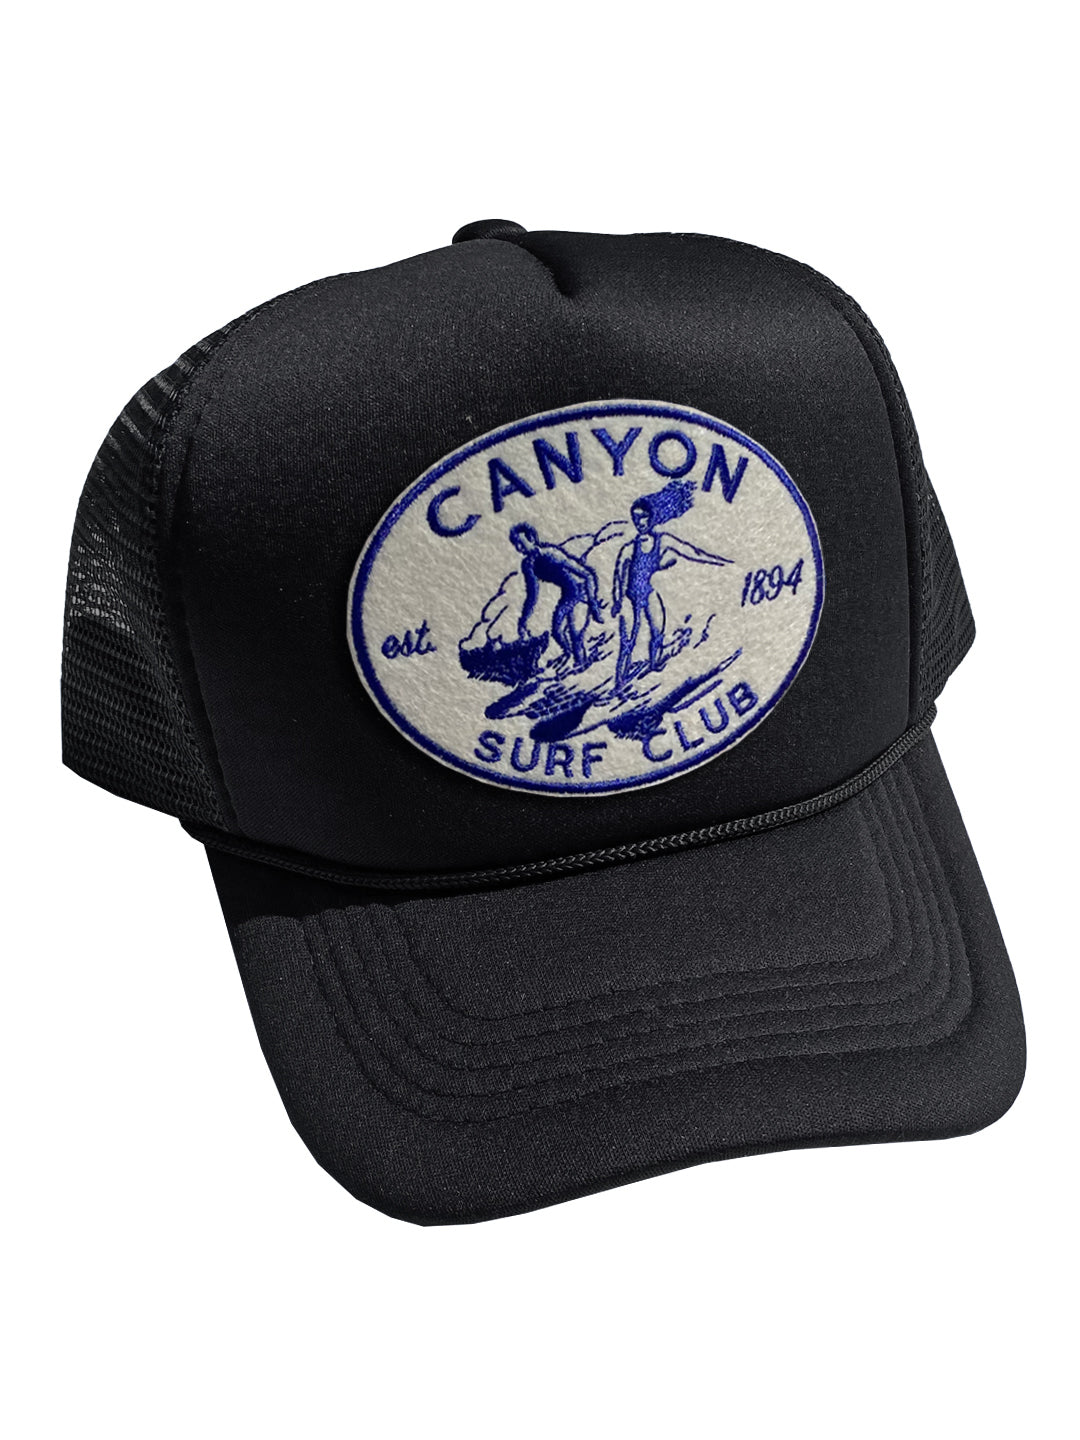 Canyon Surf Club Trucker